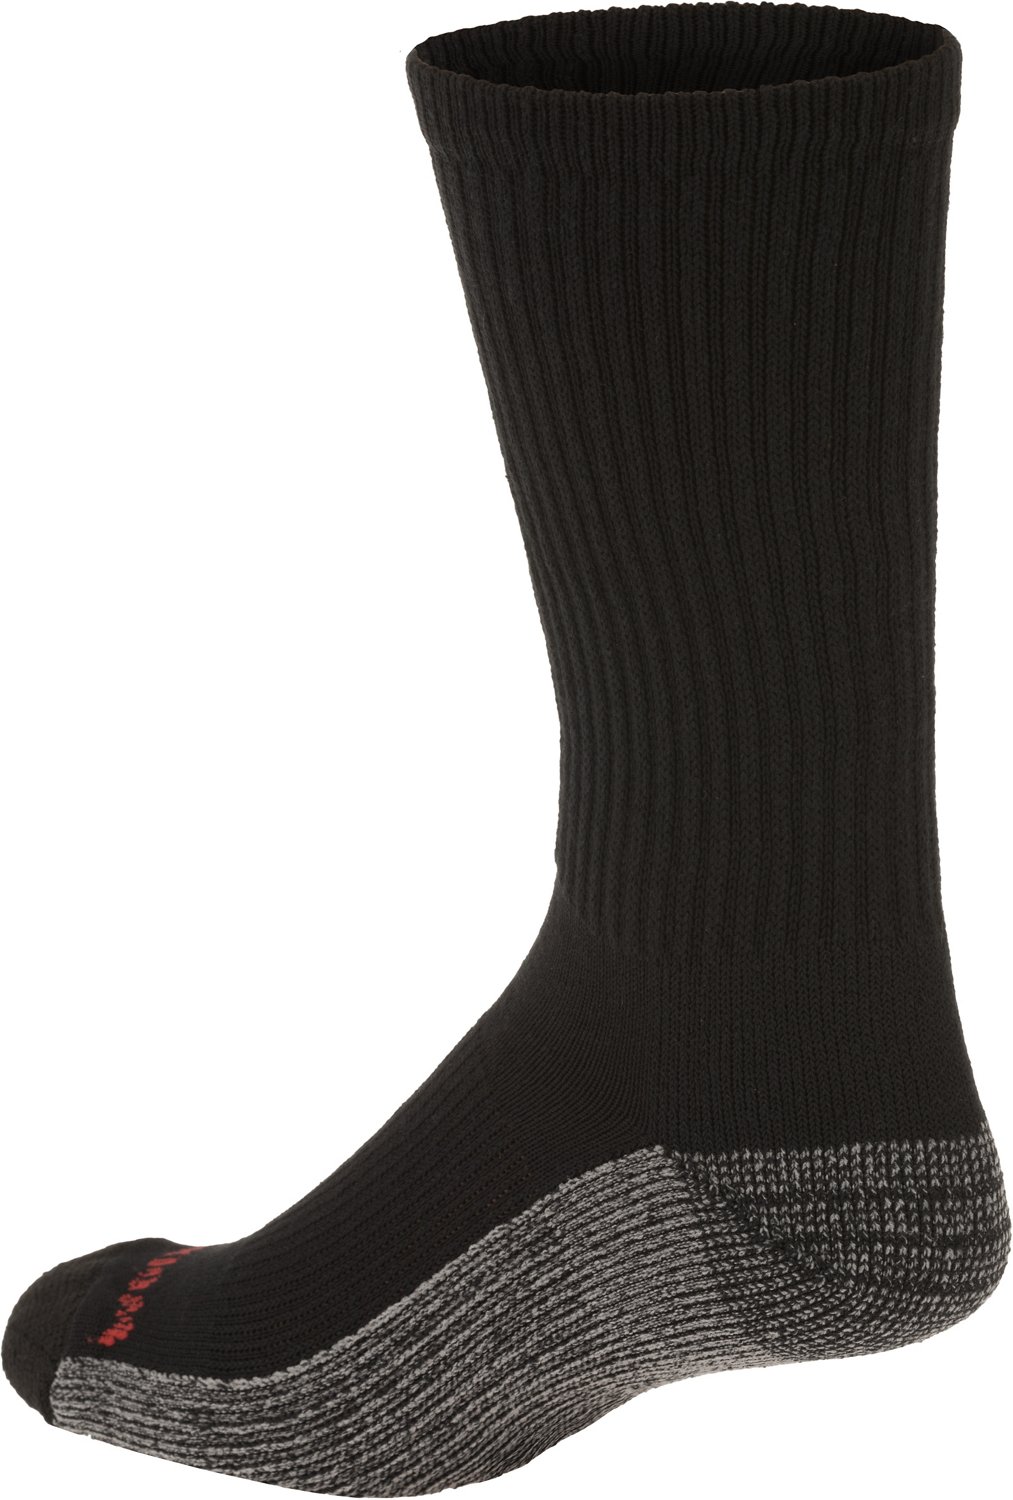 Wolverine Men's Cotton Comfort Steel Toe Boot Socks 3 Pack | Academy